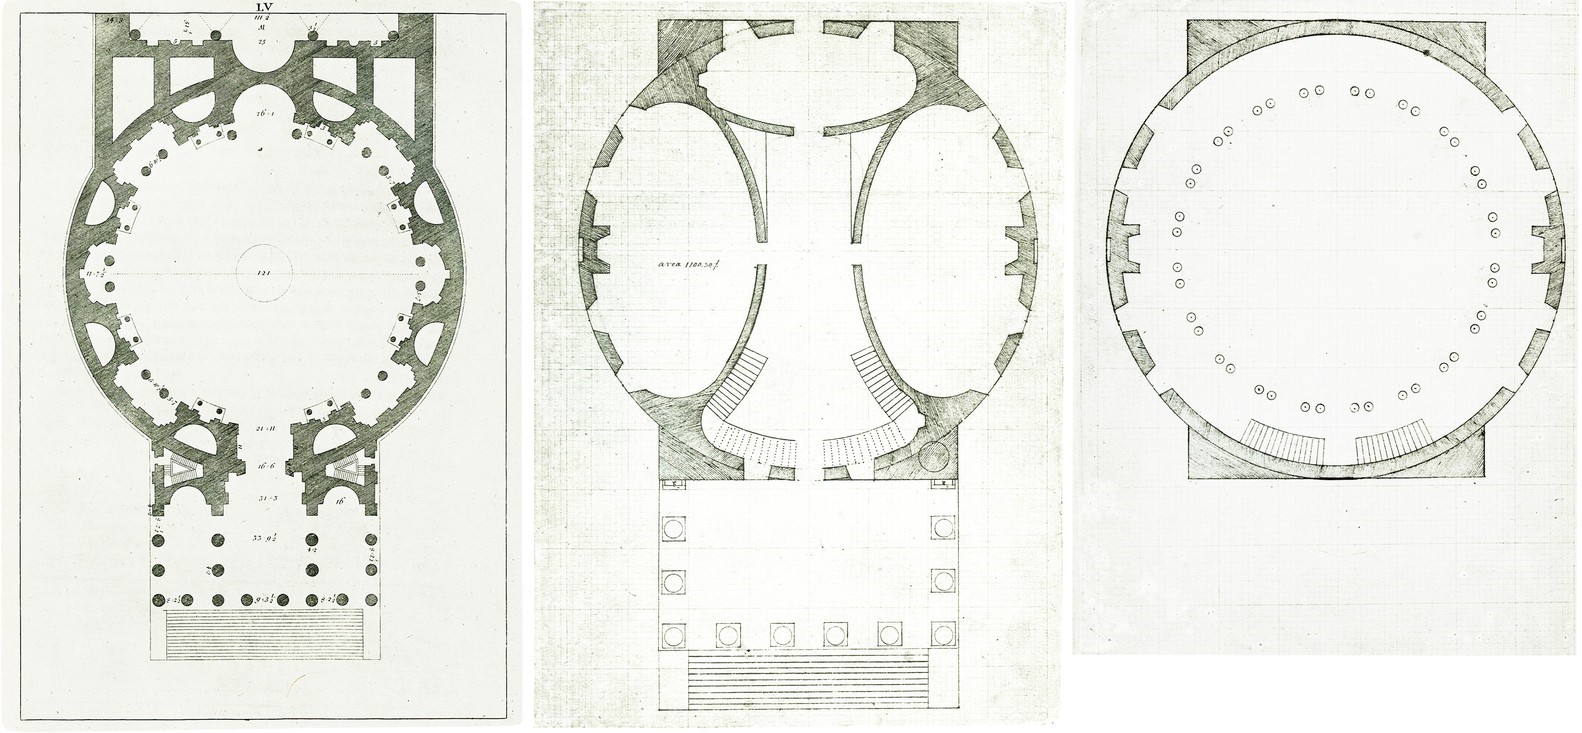 Comparison of the Roman Pantheon and Rotunda